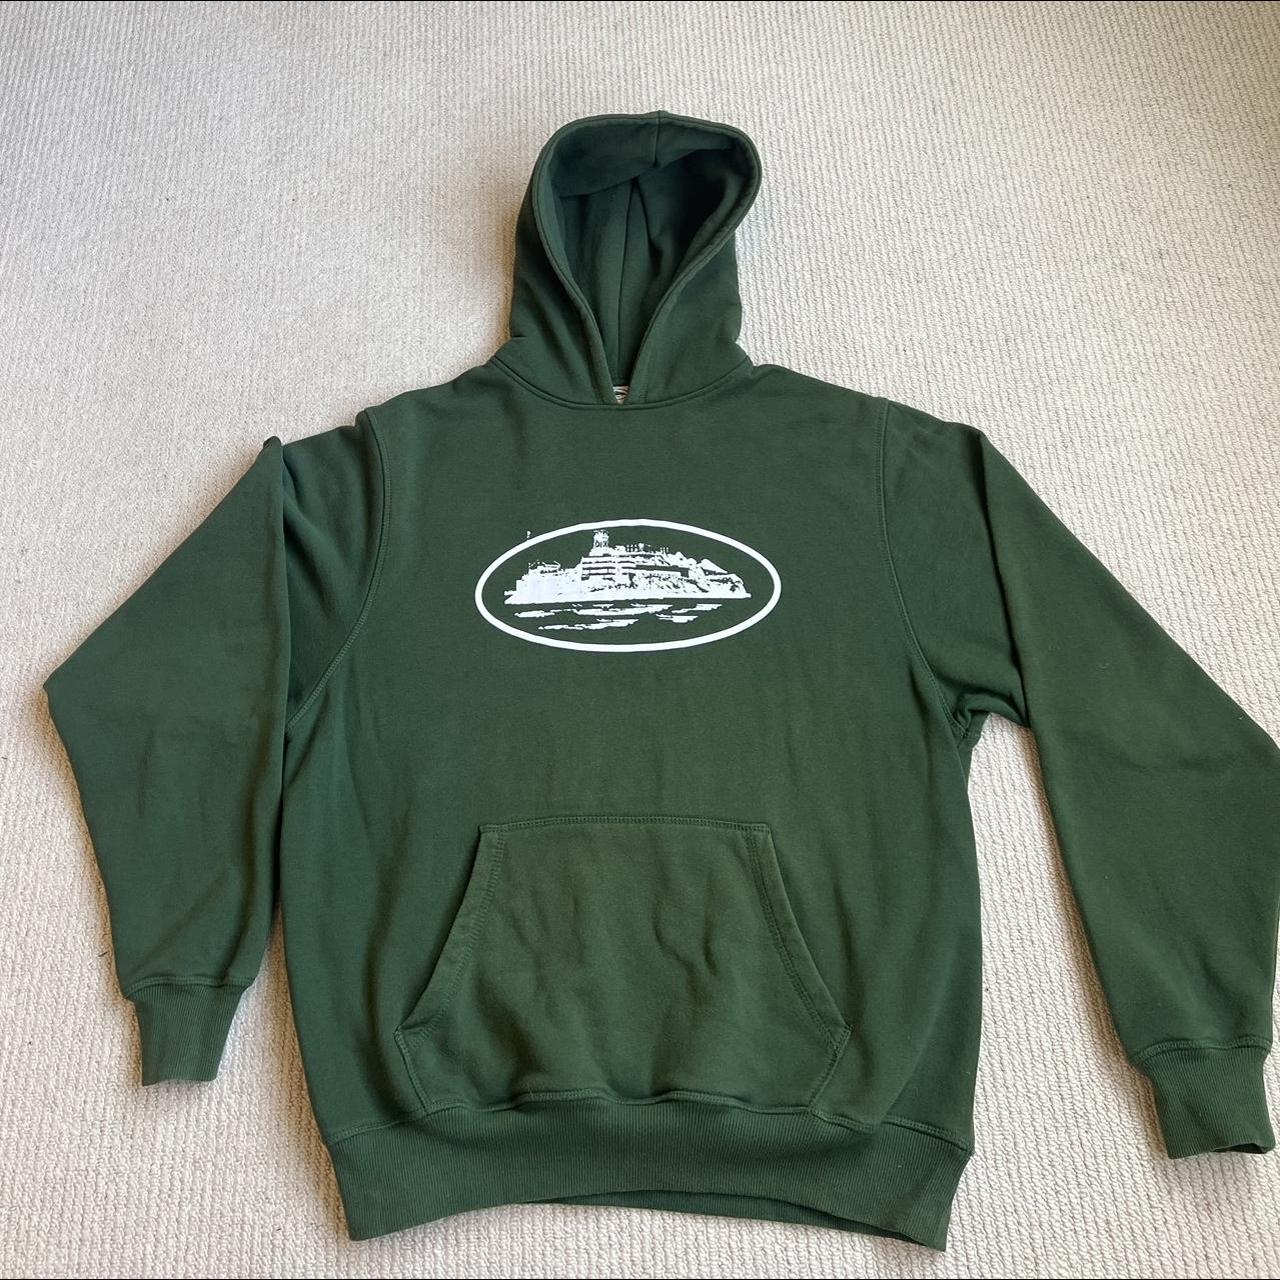 Corteiz hoodie green Alcatraz Size large Good... - Depop